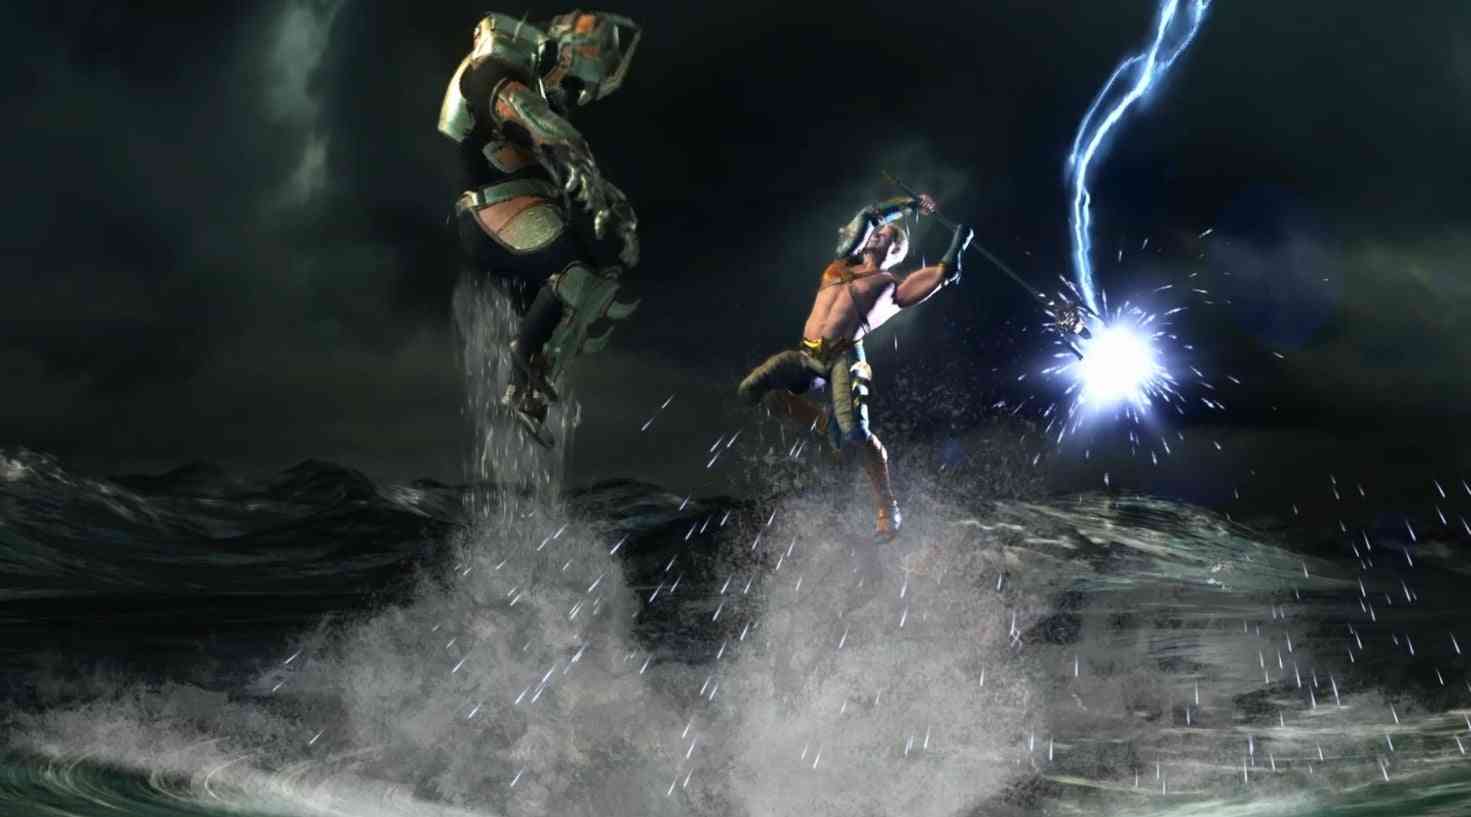 Injustice 2 Gameplay Showcased in High-Octane, Cinematic Trailer